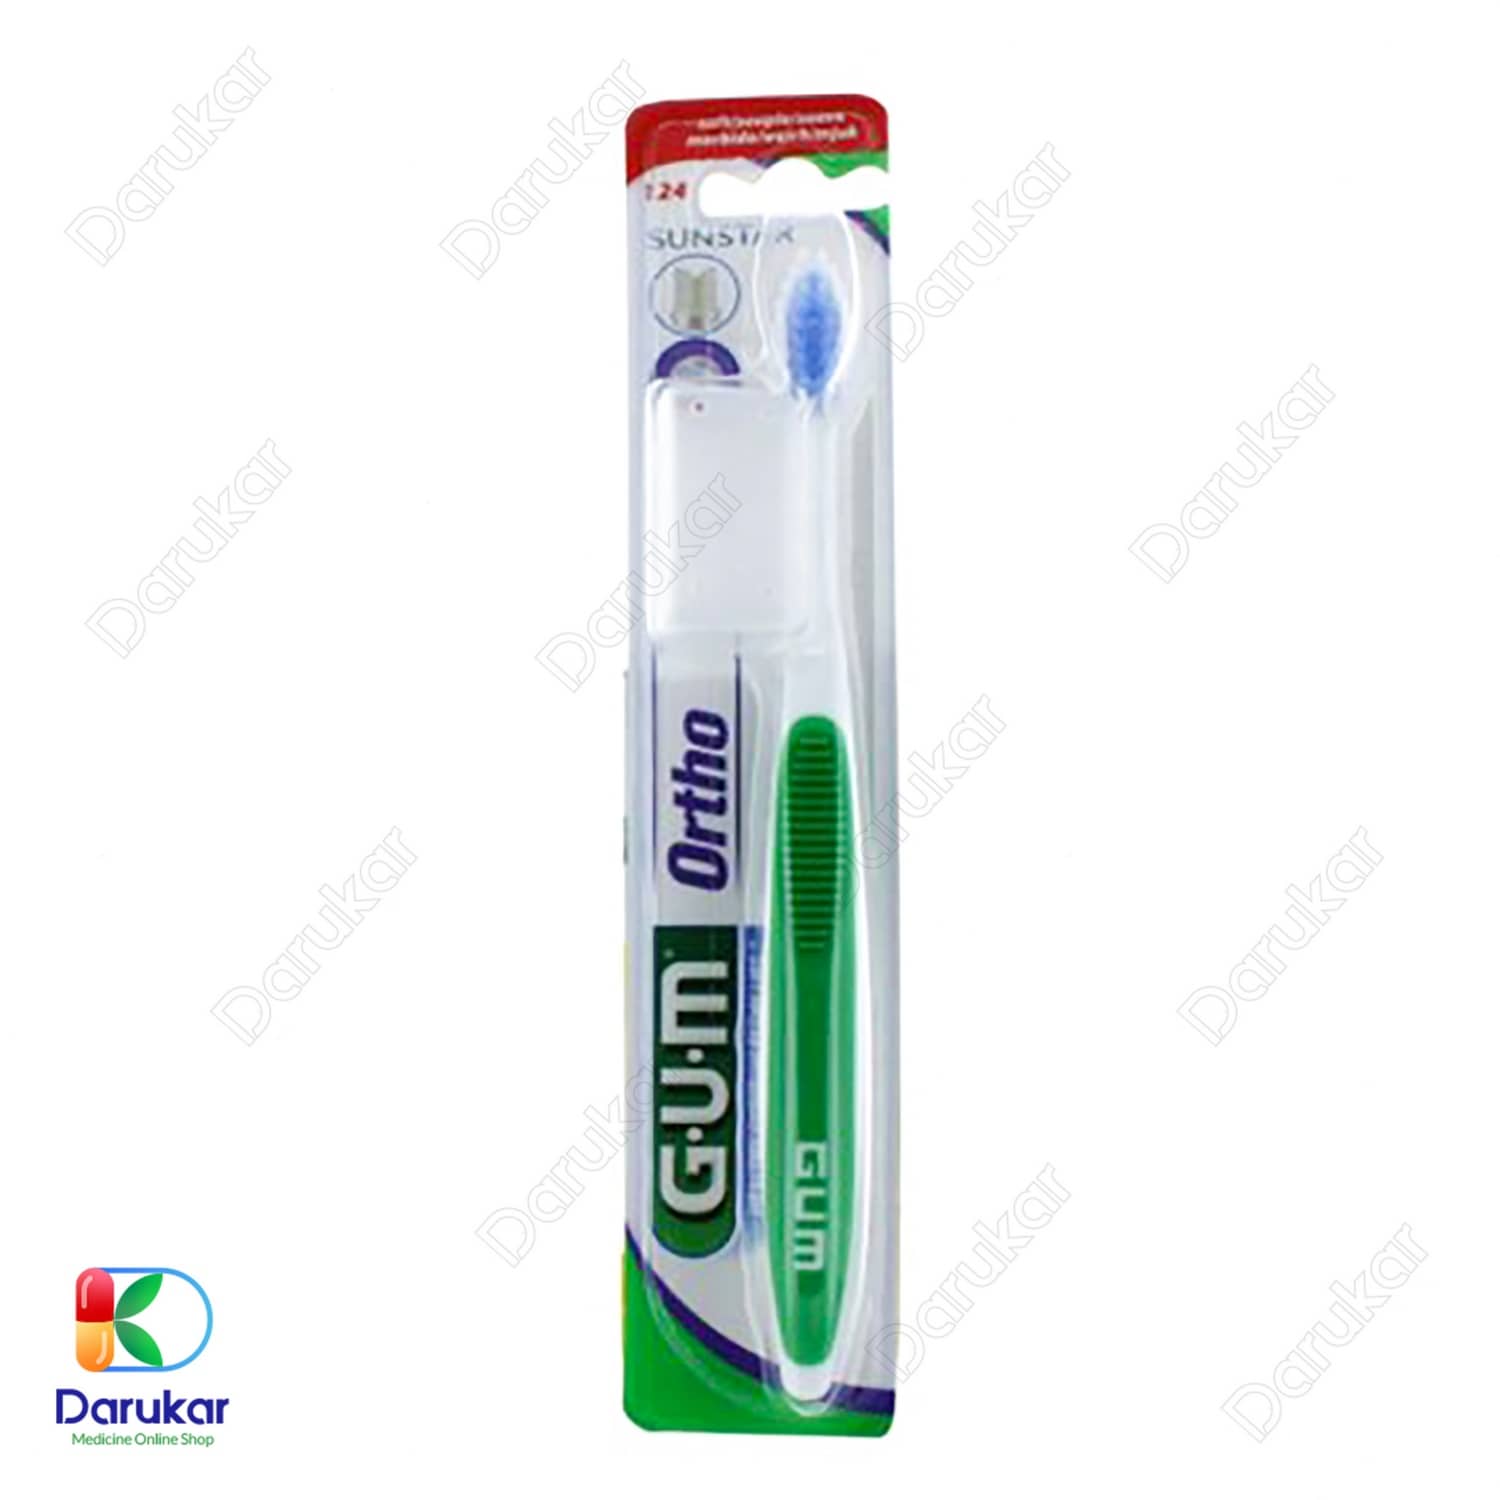 G.U.M Ortho Toothbrush 124 Image Gallrery